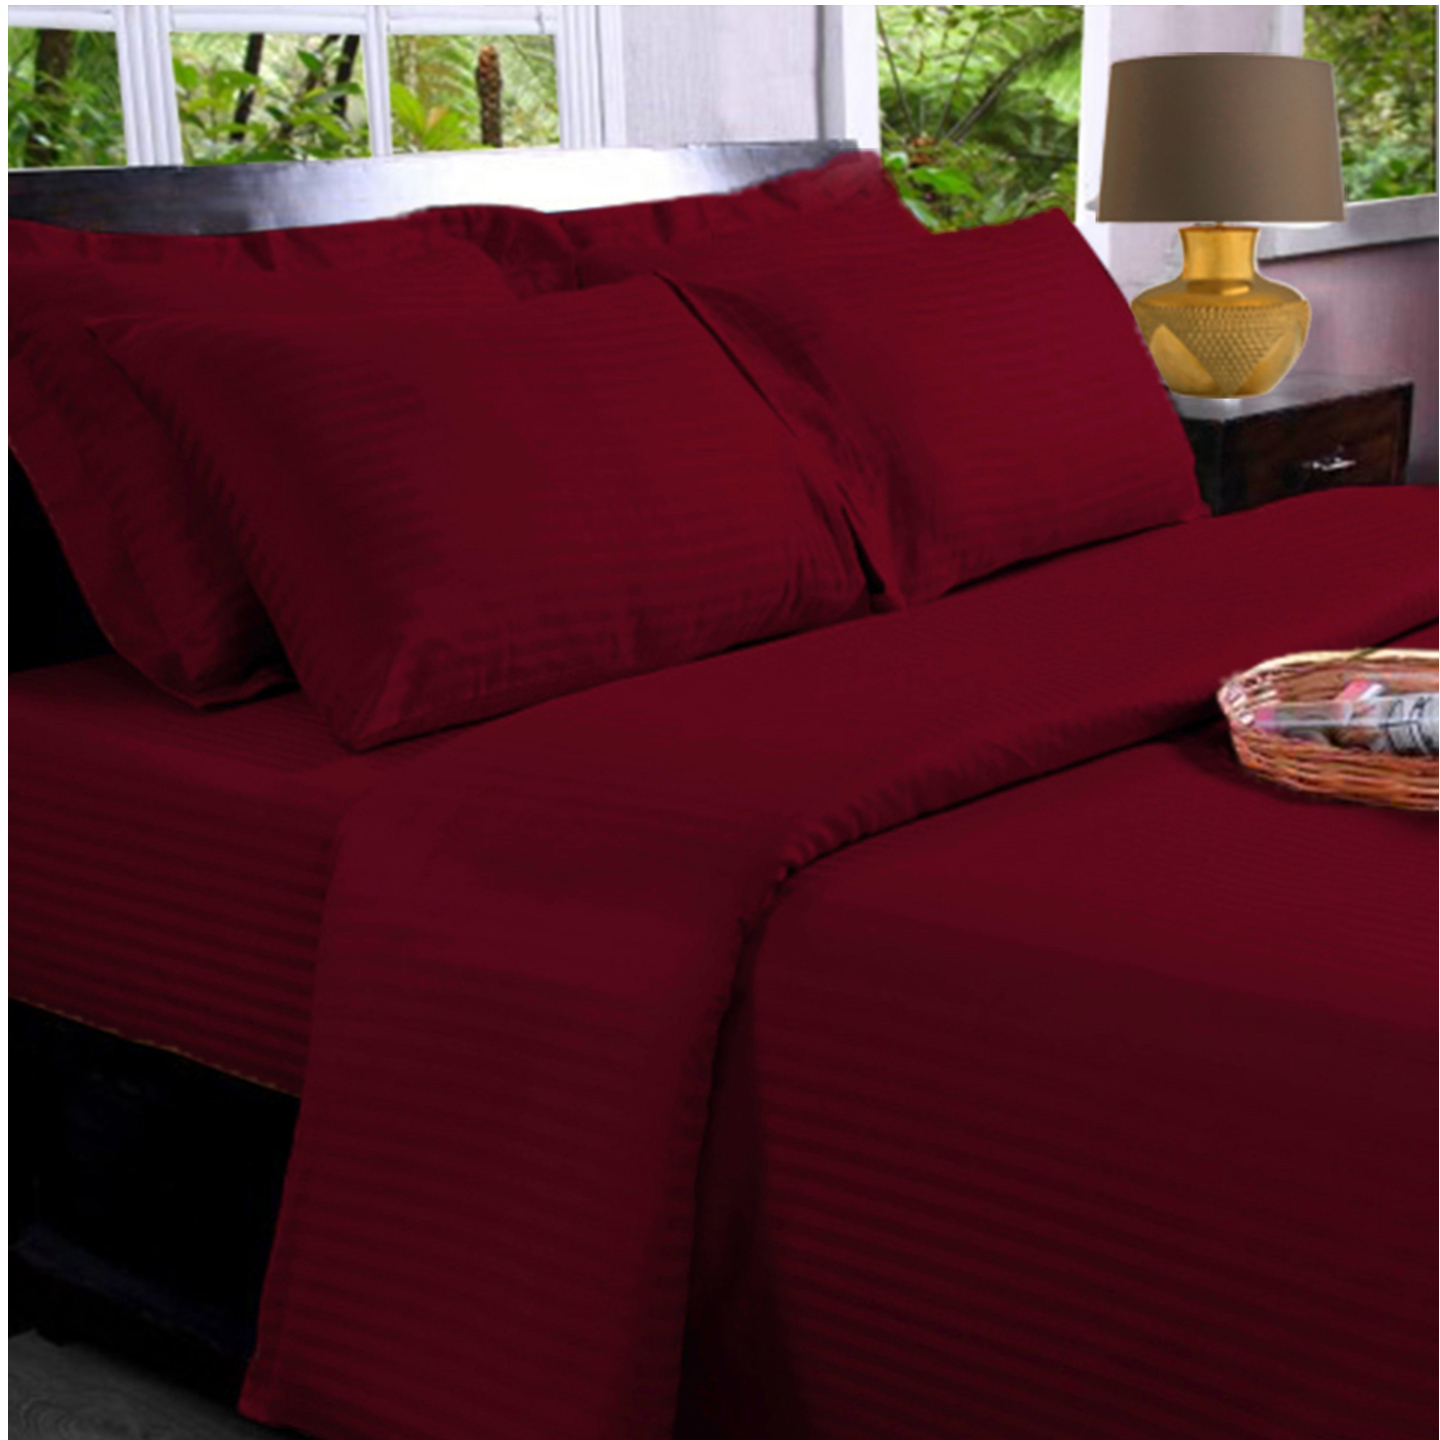 Burgundy Maroon - 100 Cotton - Premium Sateen 330 Thread Count - Bed Sheet Set - King Size